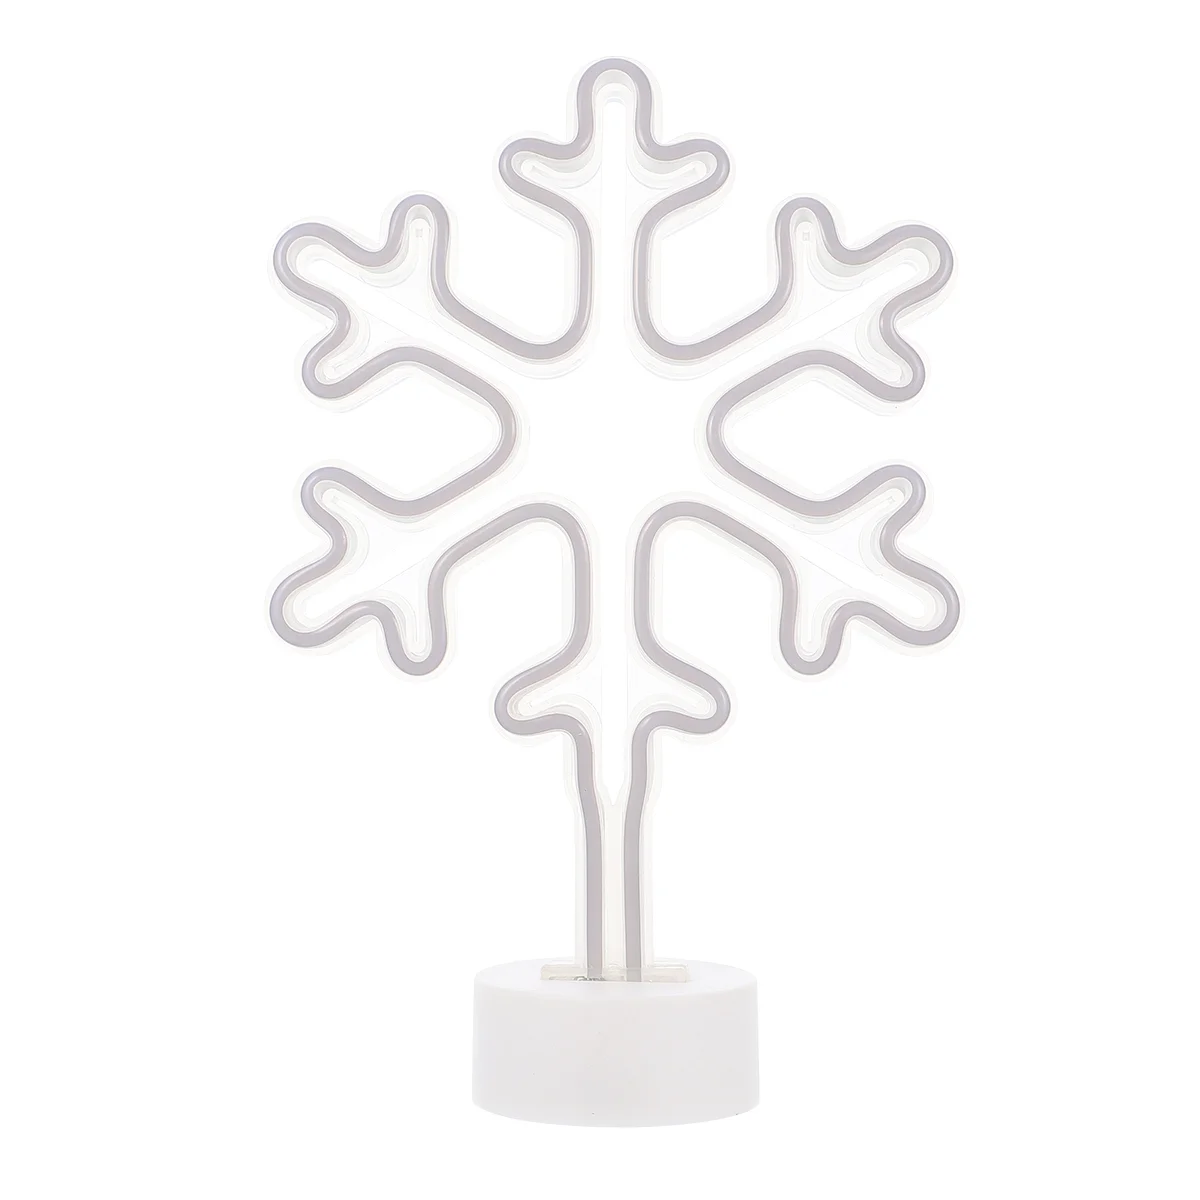 

1pc Exquisite Lightweight Reusable Decorative Creative Durable Desktop Adornment Snowflake Relatives Friends Family